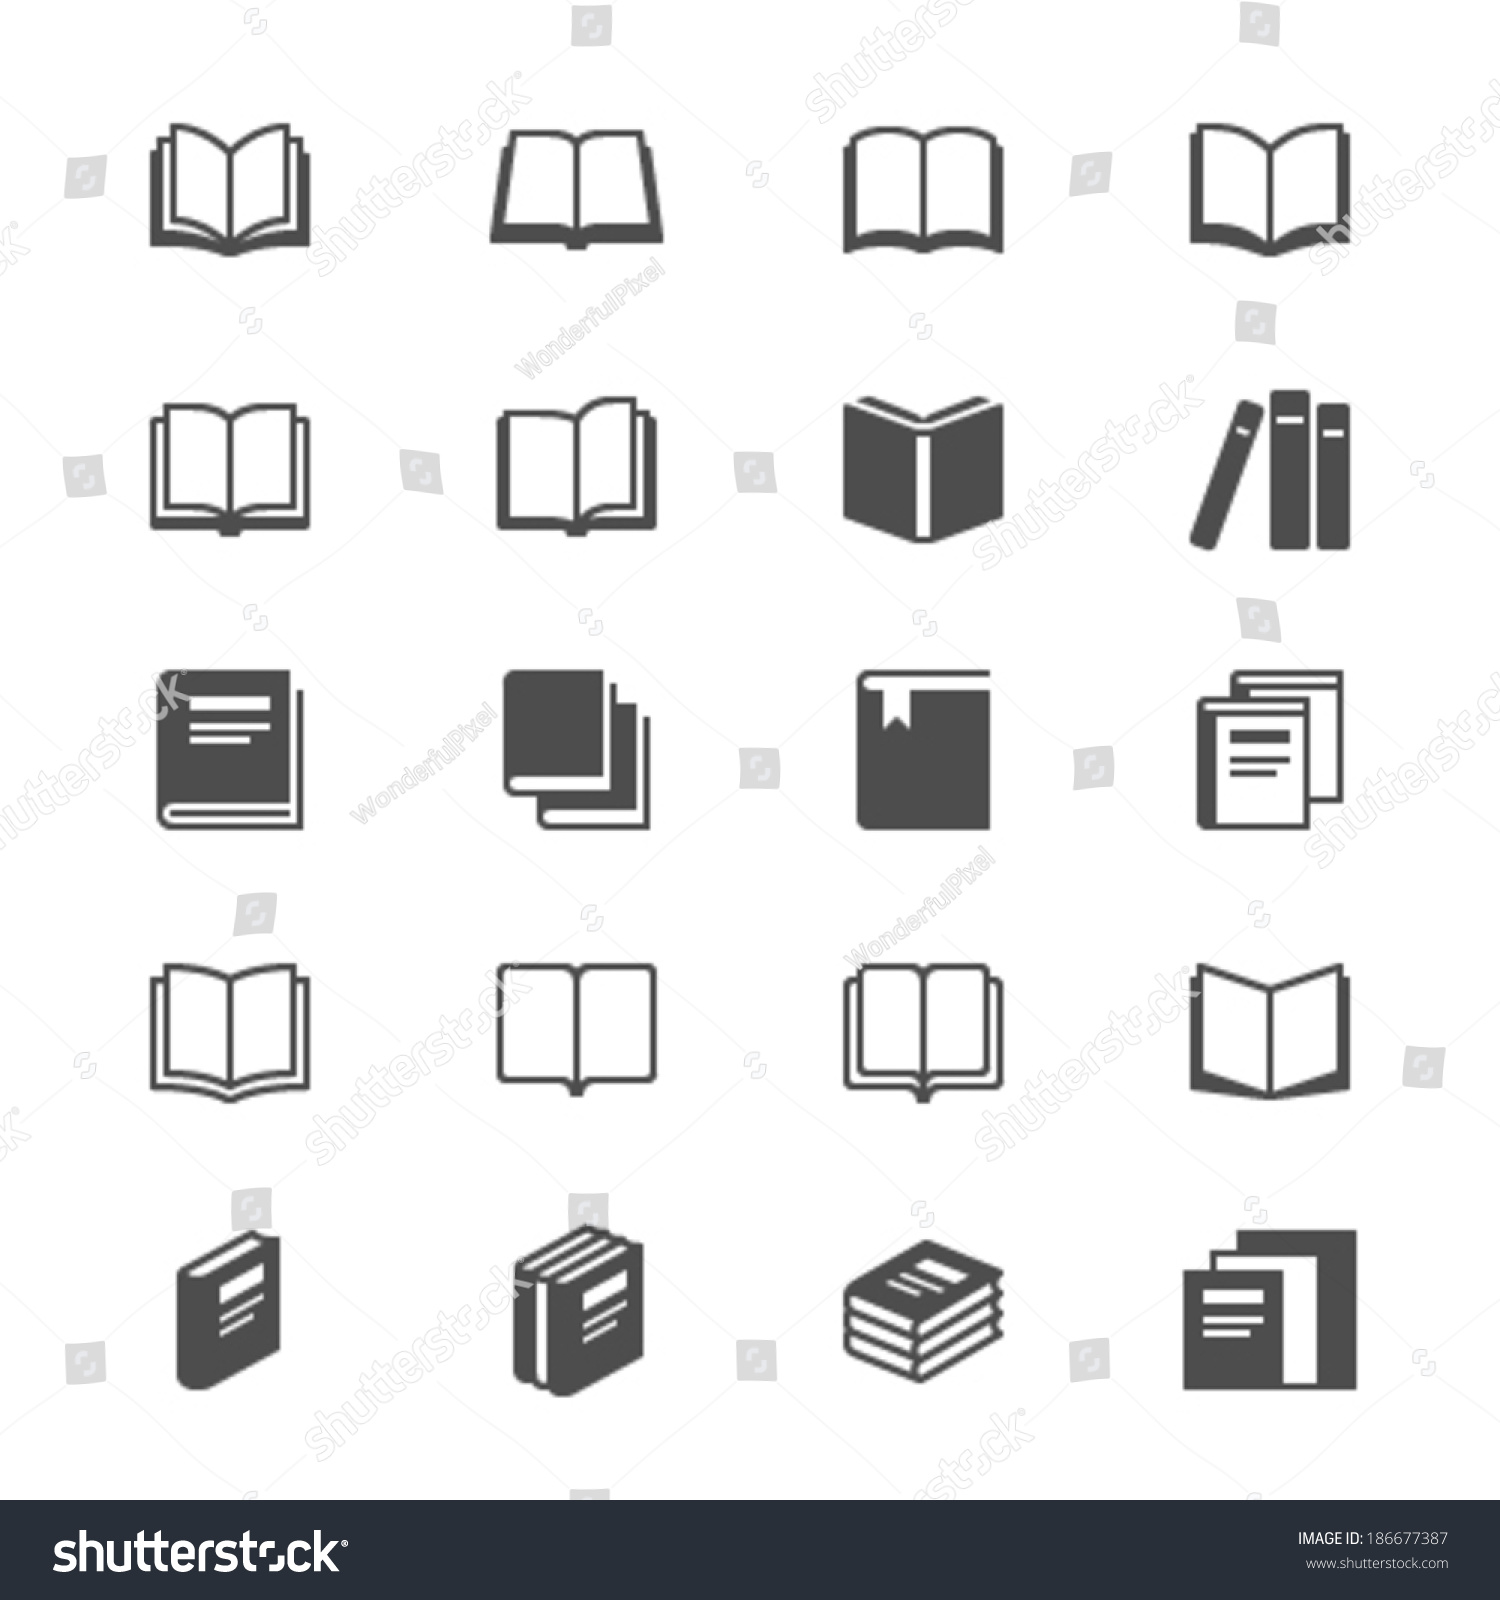 Book Flat Icons Stockowa ilustracja wektorowa 186677387 : Shutterstock